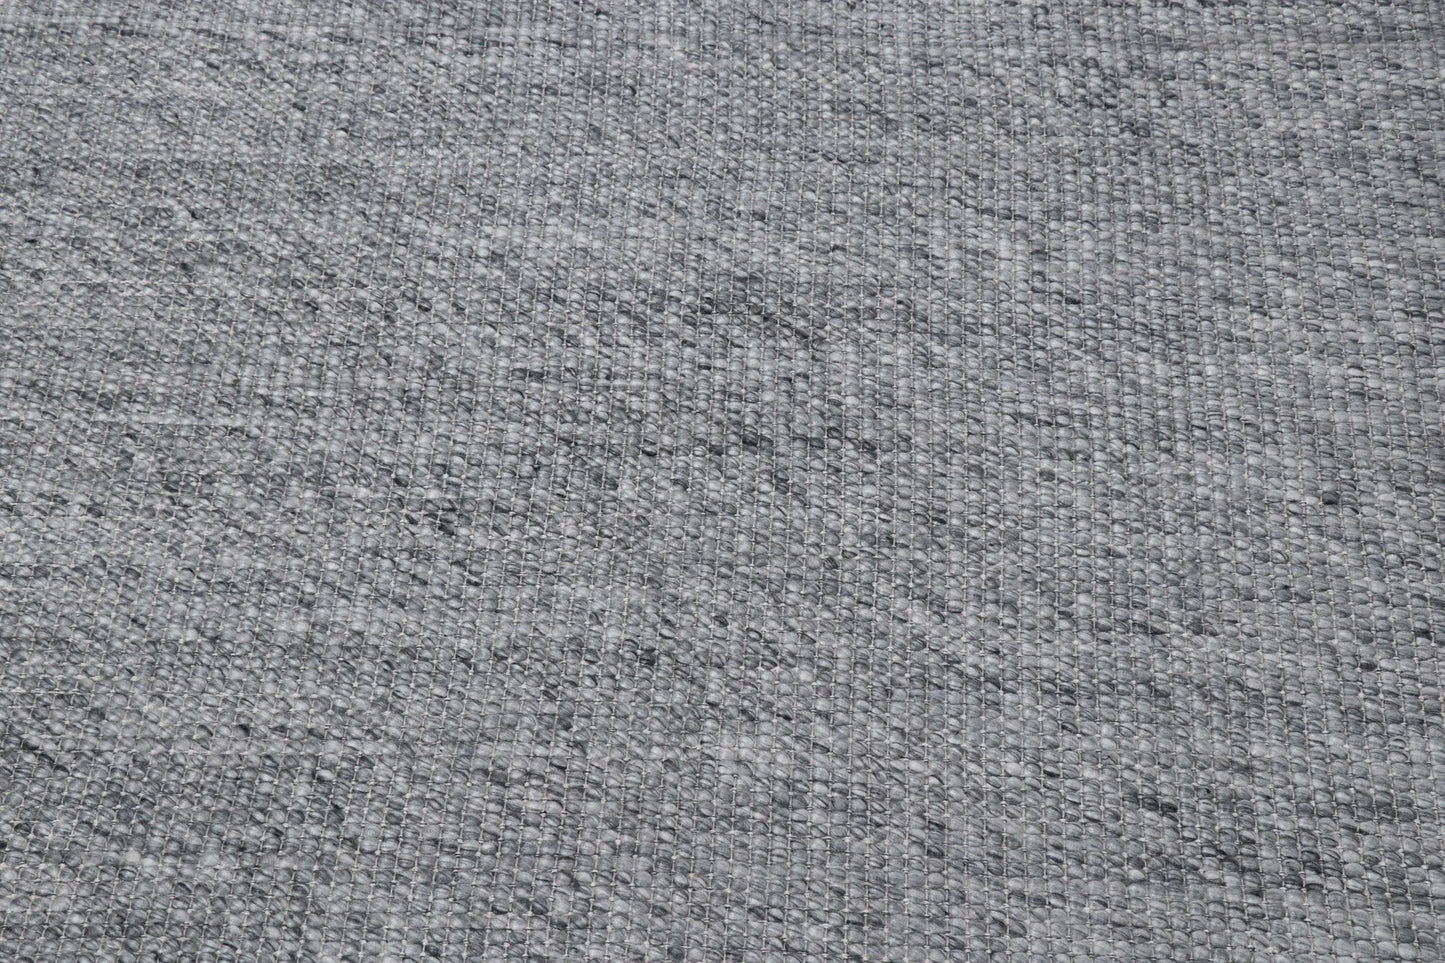 Decor Grey Wool Rug The Rug Co